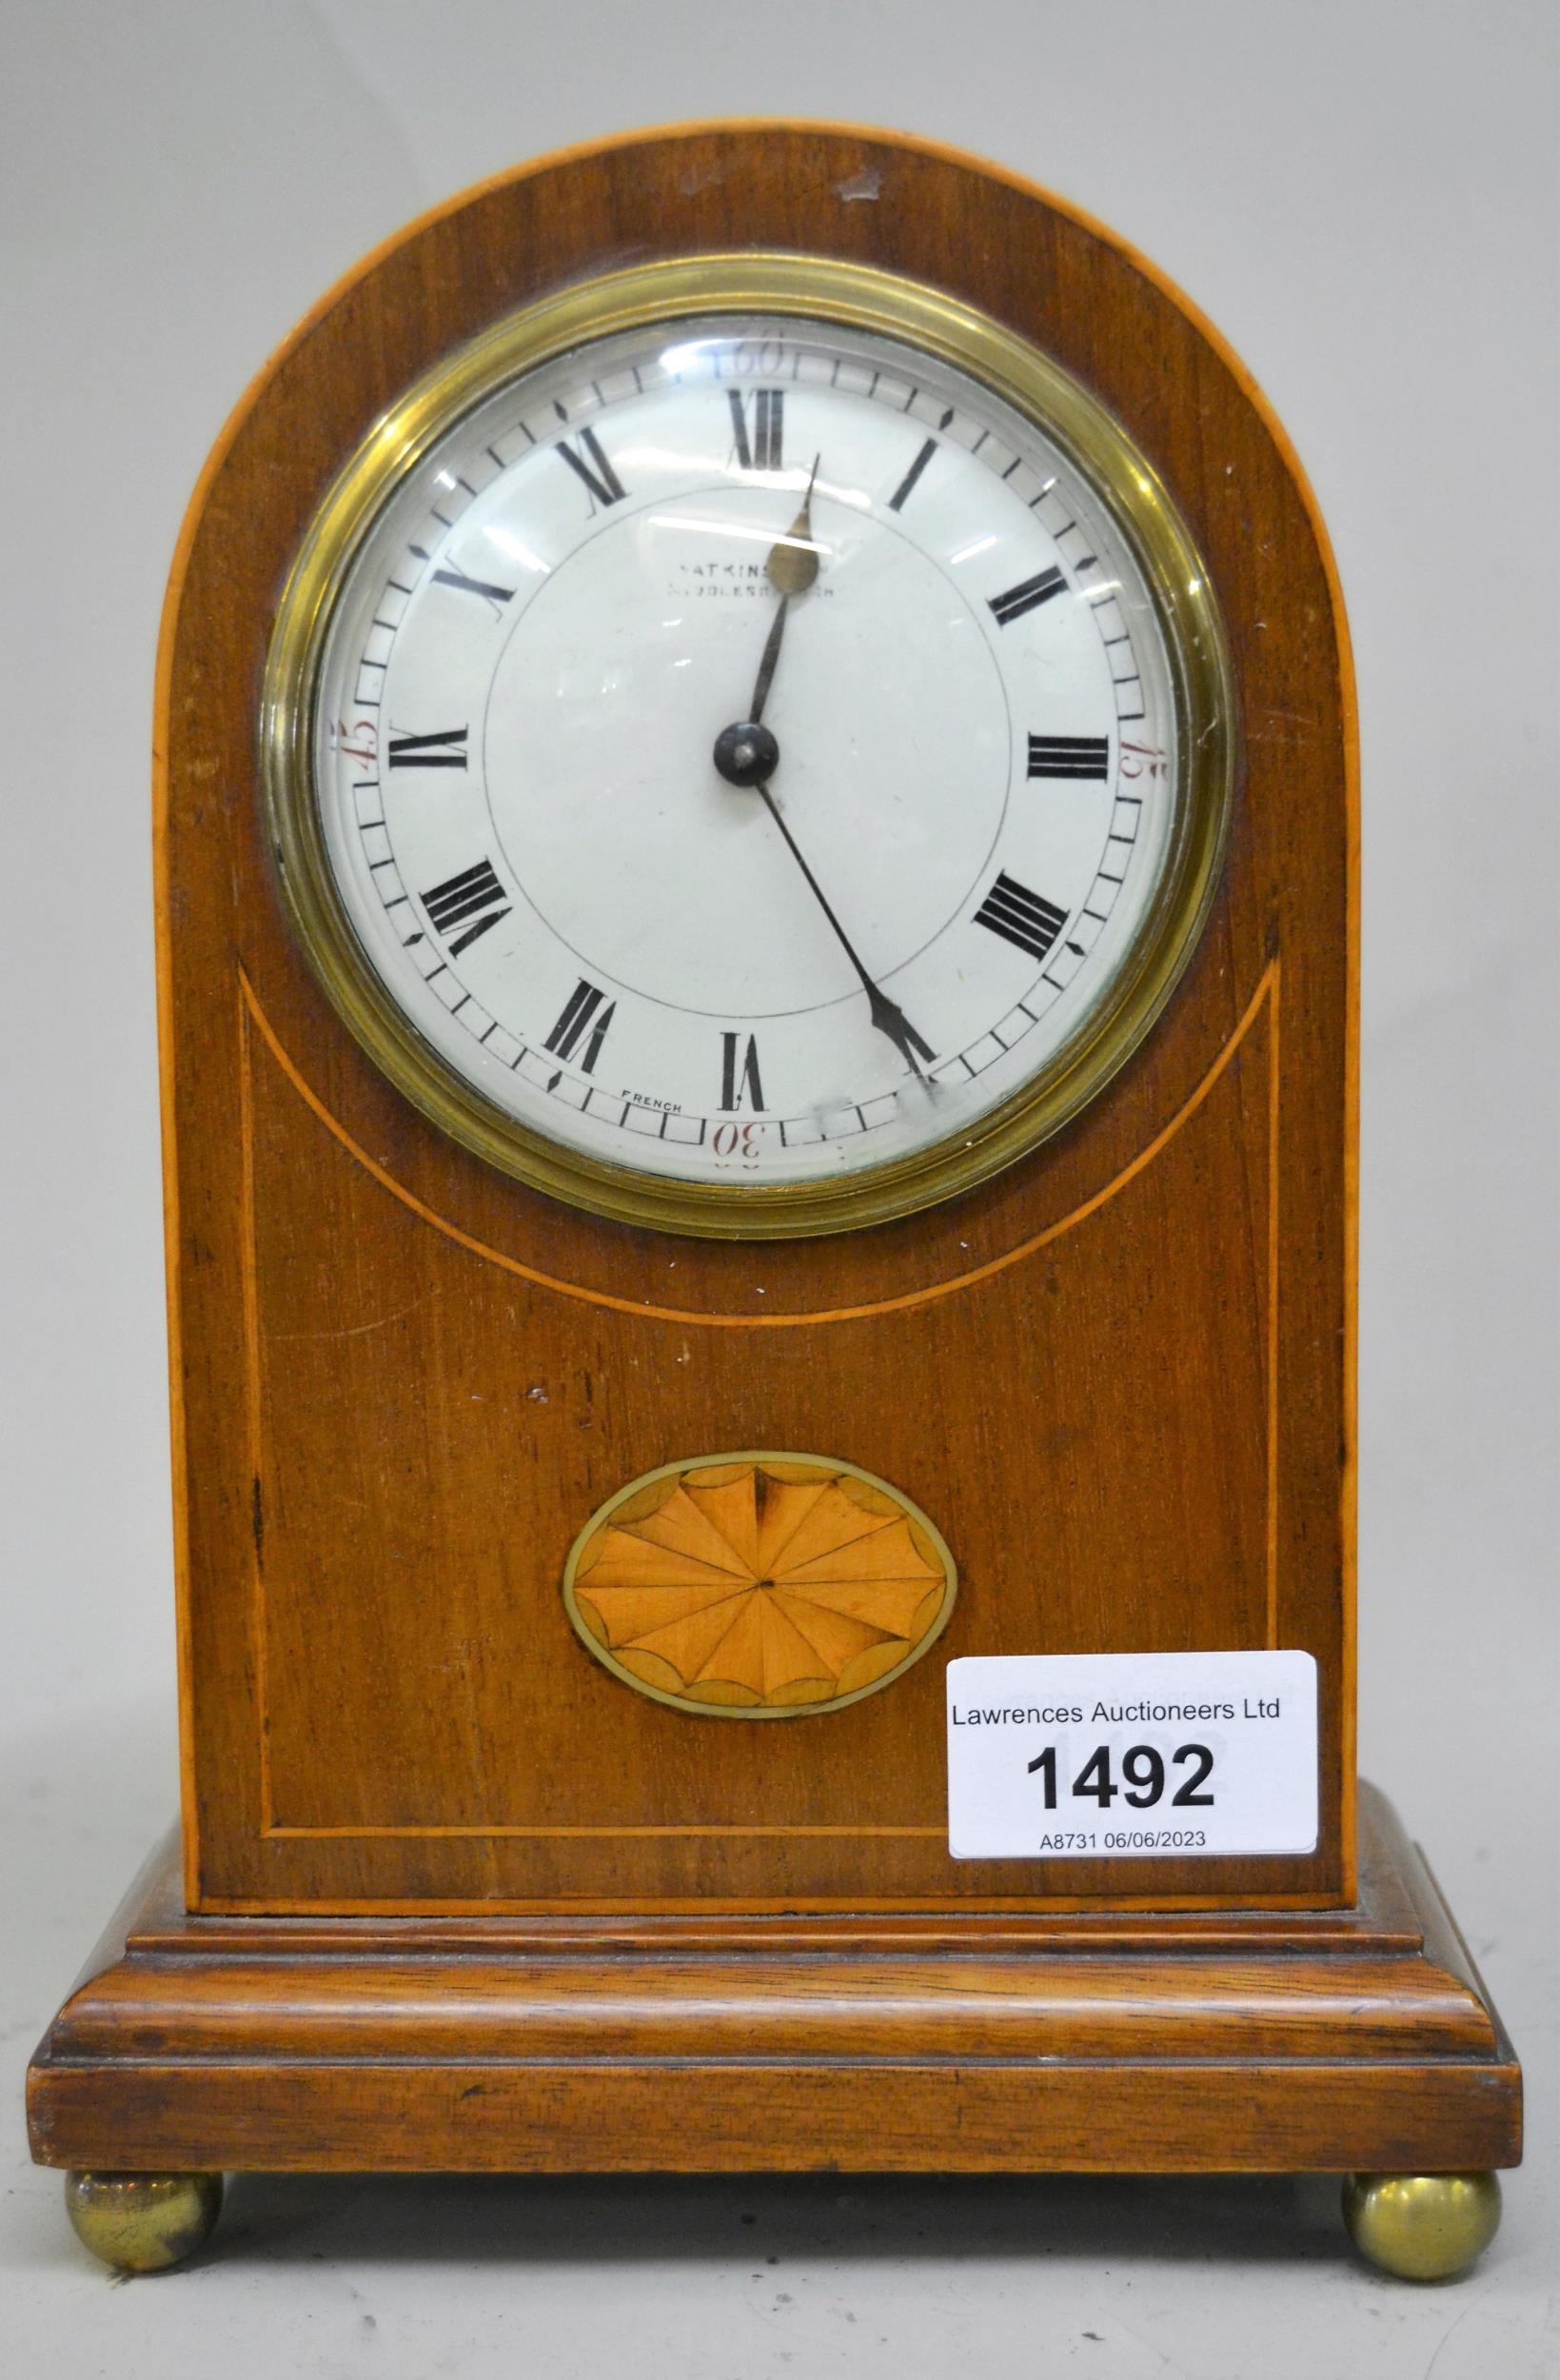 Edwardian mahogany and boxwood line inlaid mantel clock, the circular enamel dial with Roman